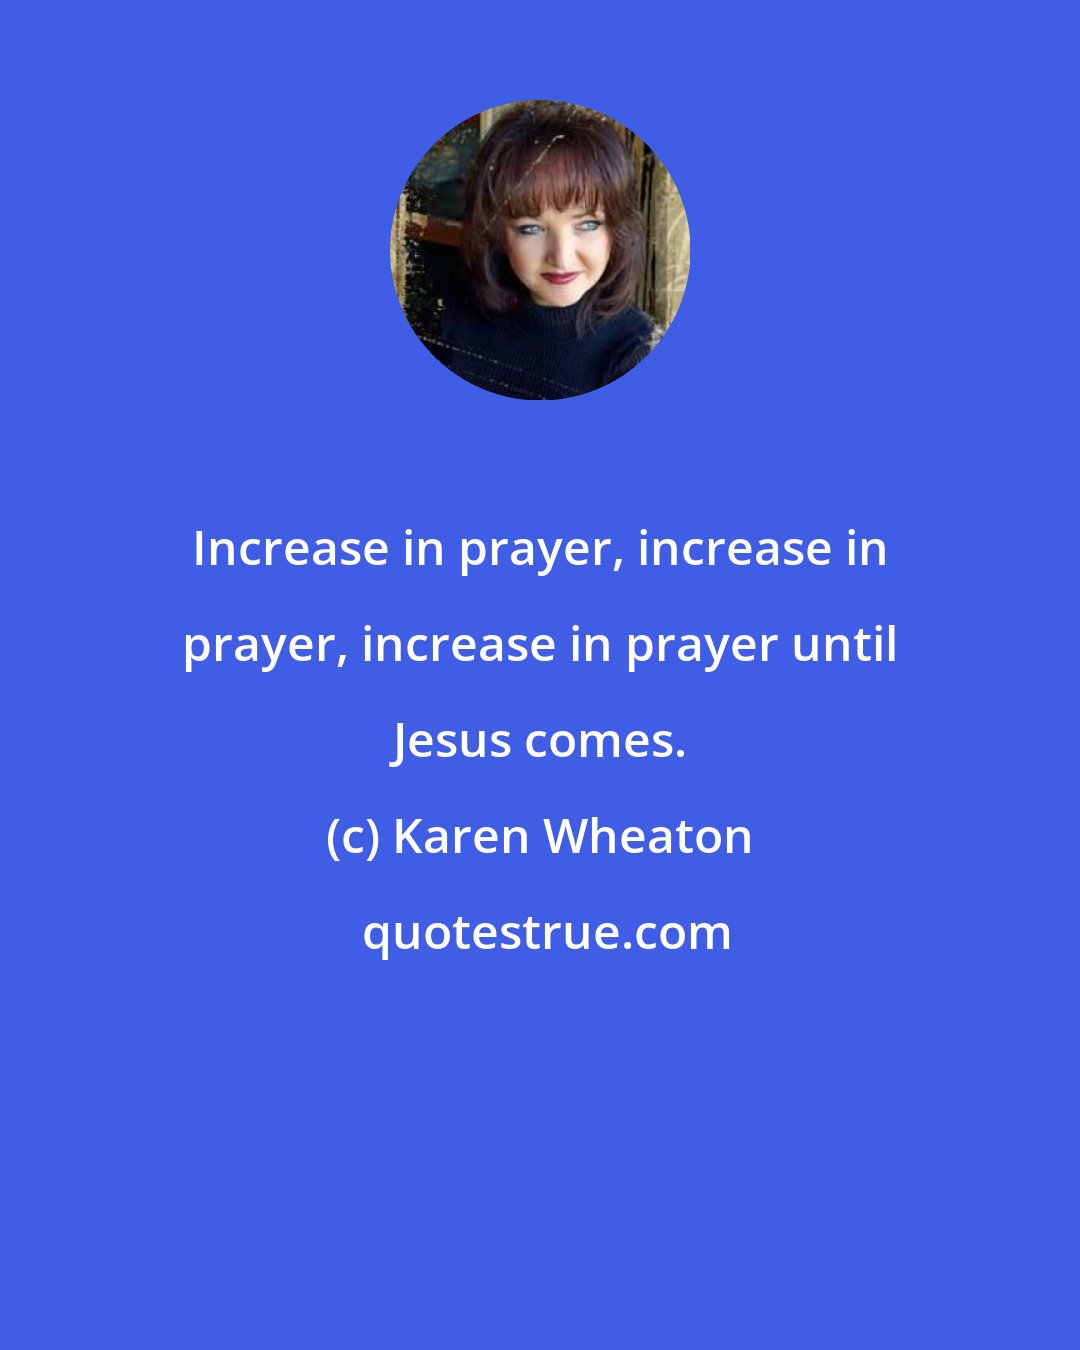 Karen Wheaton: Increase in prayer, increase in prayer, increase in prayer until Jesus comes.